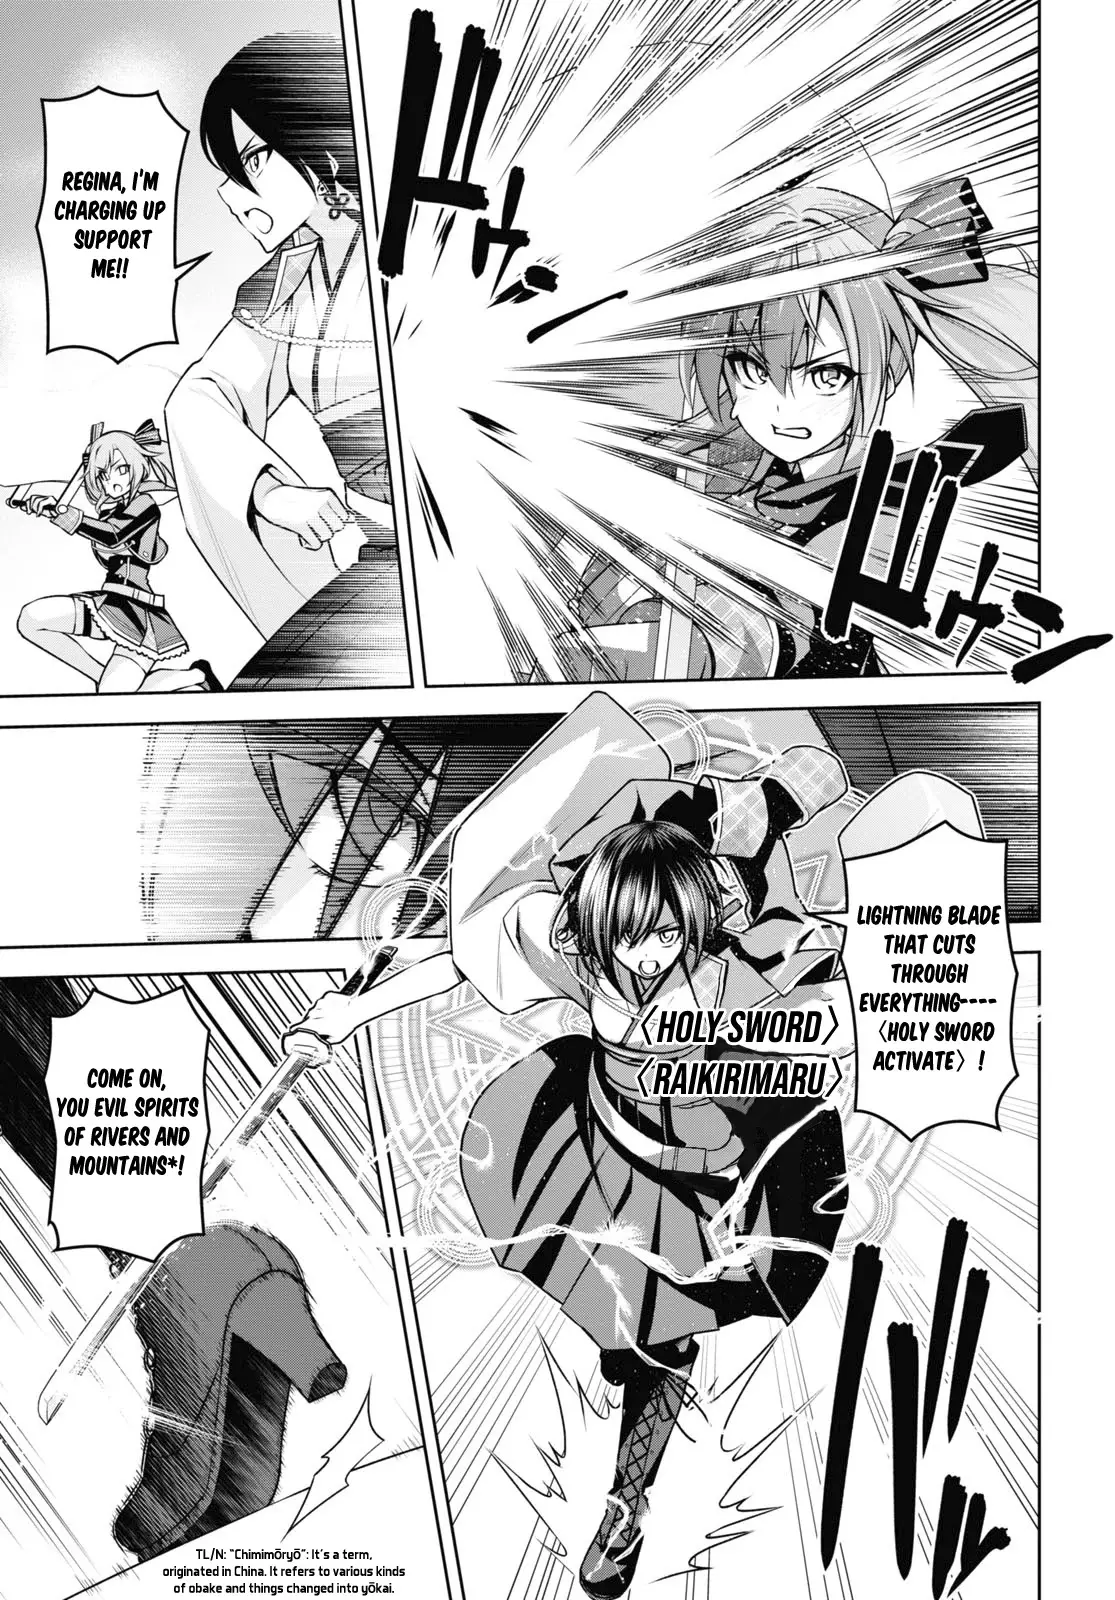 Demon's Sword Master Of Excalibur School - 9 page 6